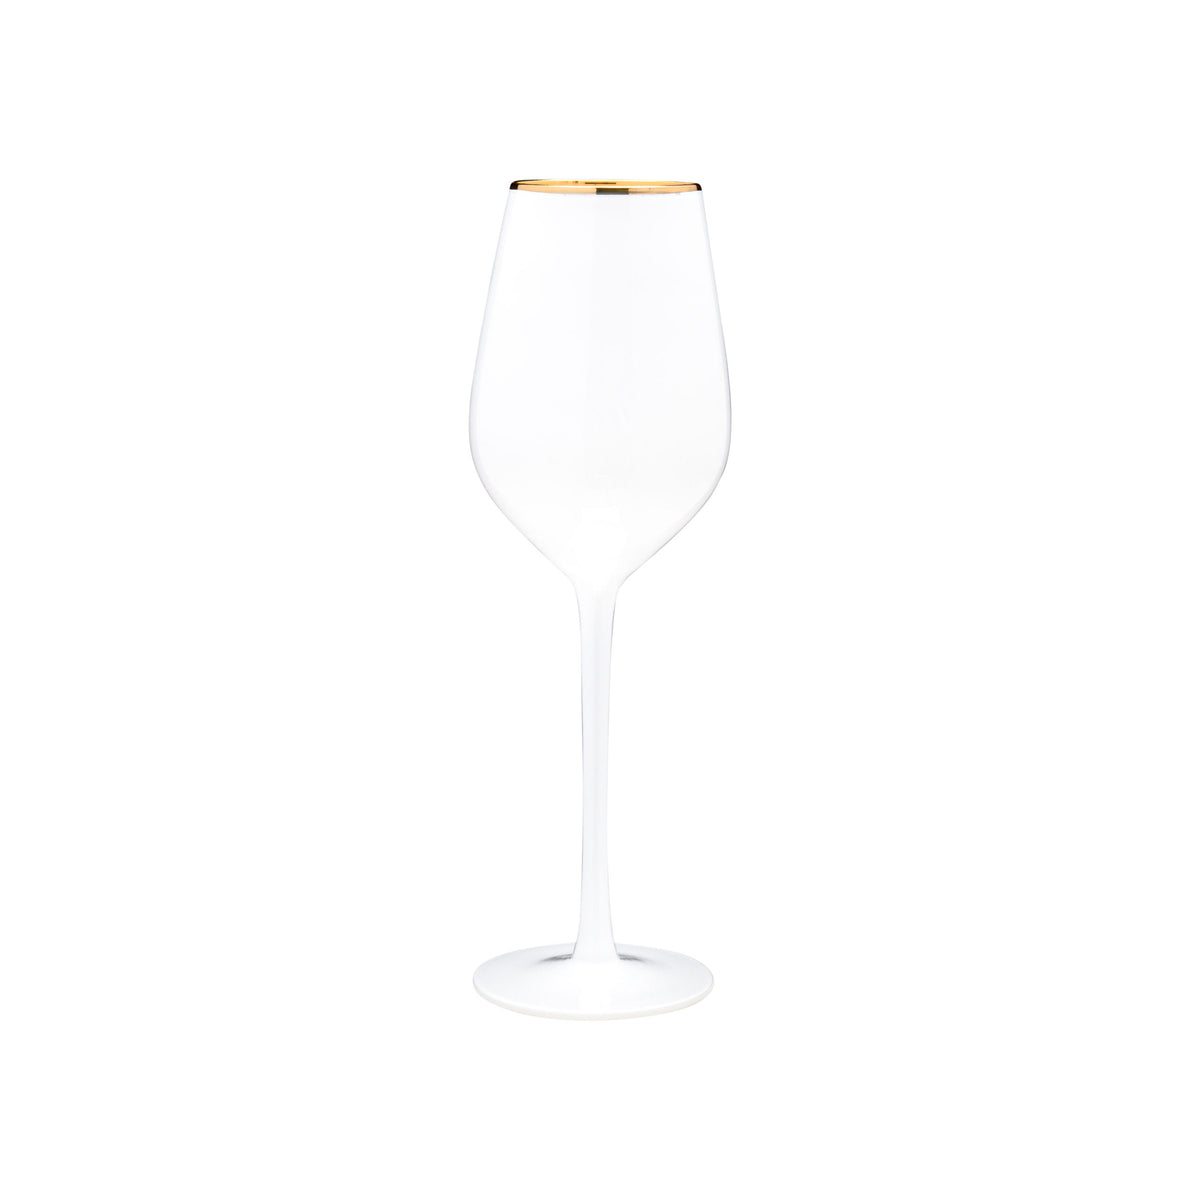 Vikko Decor Platinum Gold Rimmed Colored Wine Glass, 13.5 oz, Set Of 6 - Assorted Colors